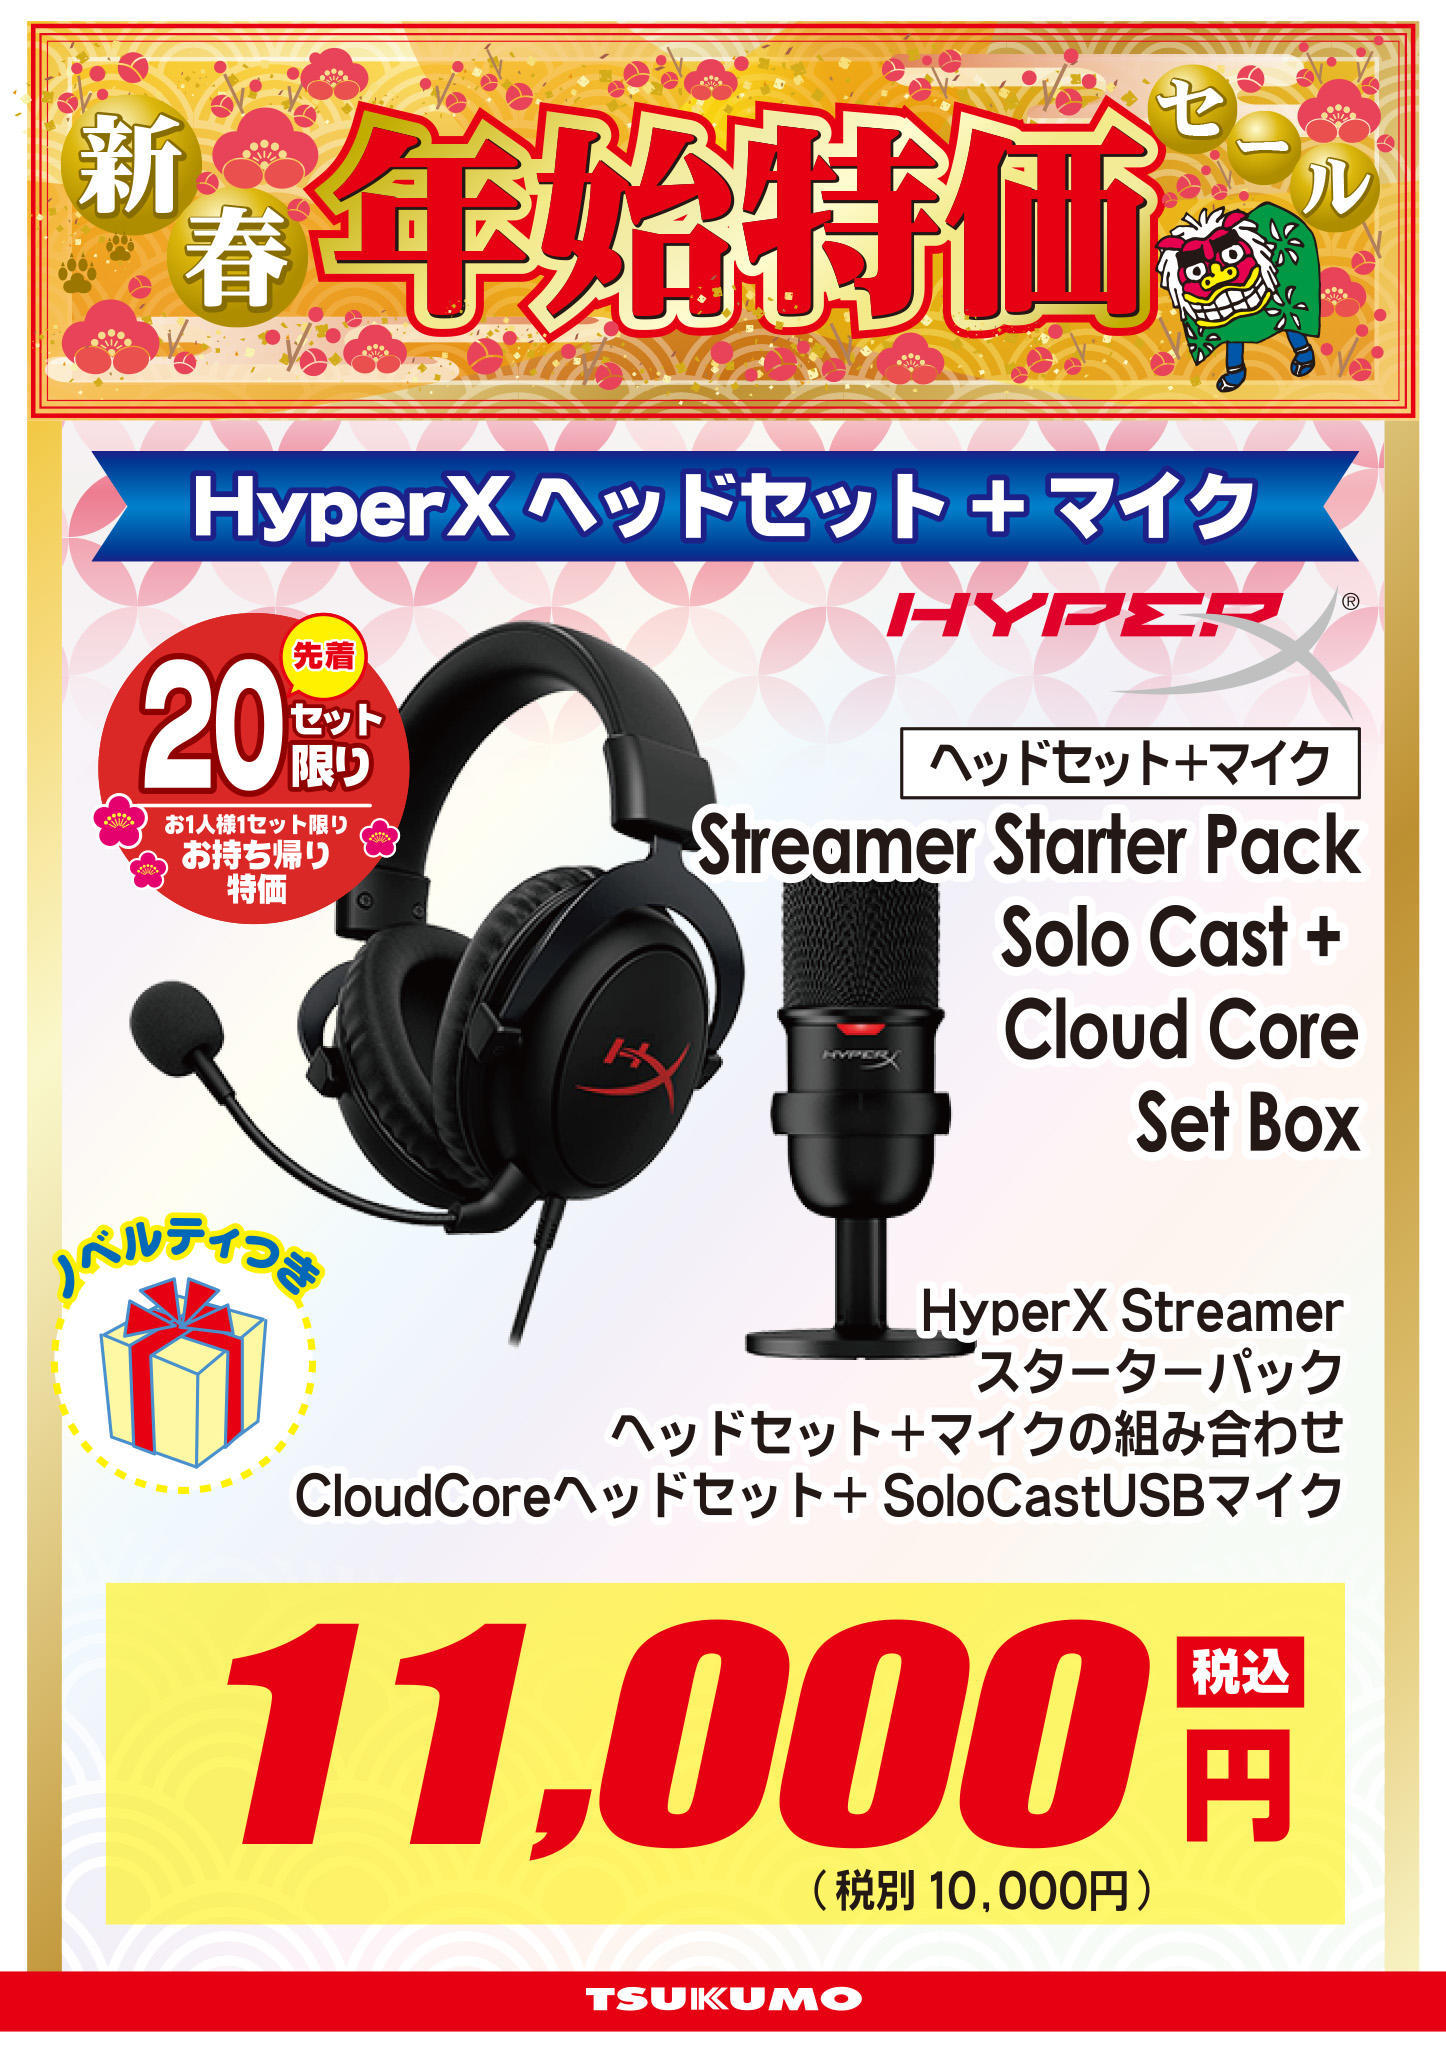 HyperX ヘッドセット + マイク.jpg